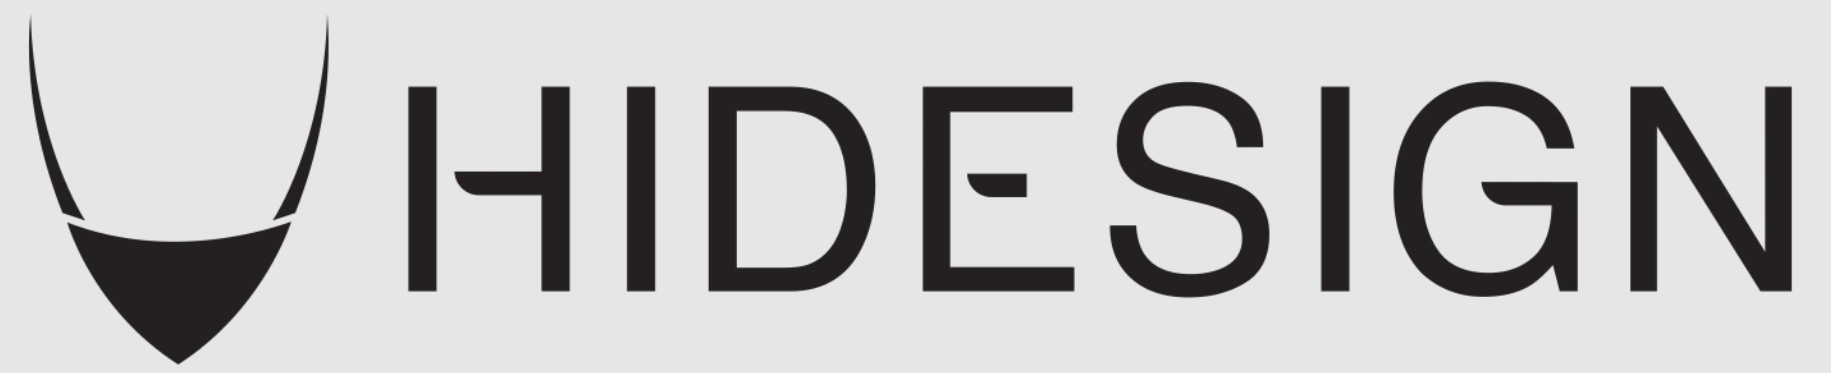 Hidesign logo